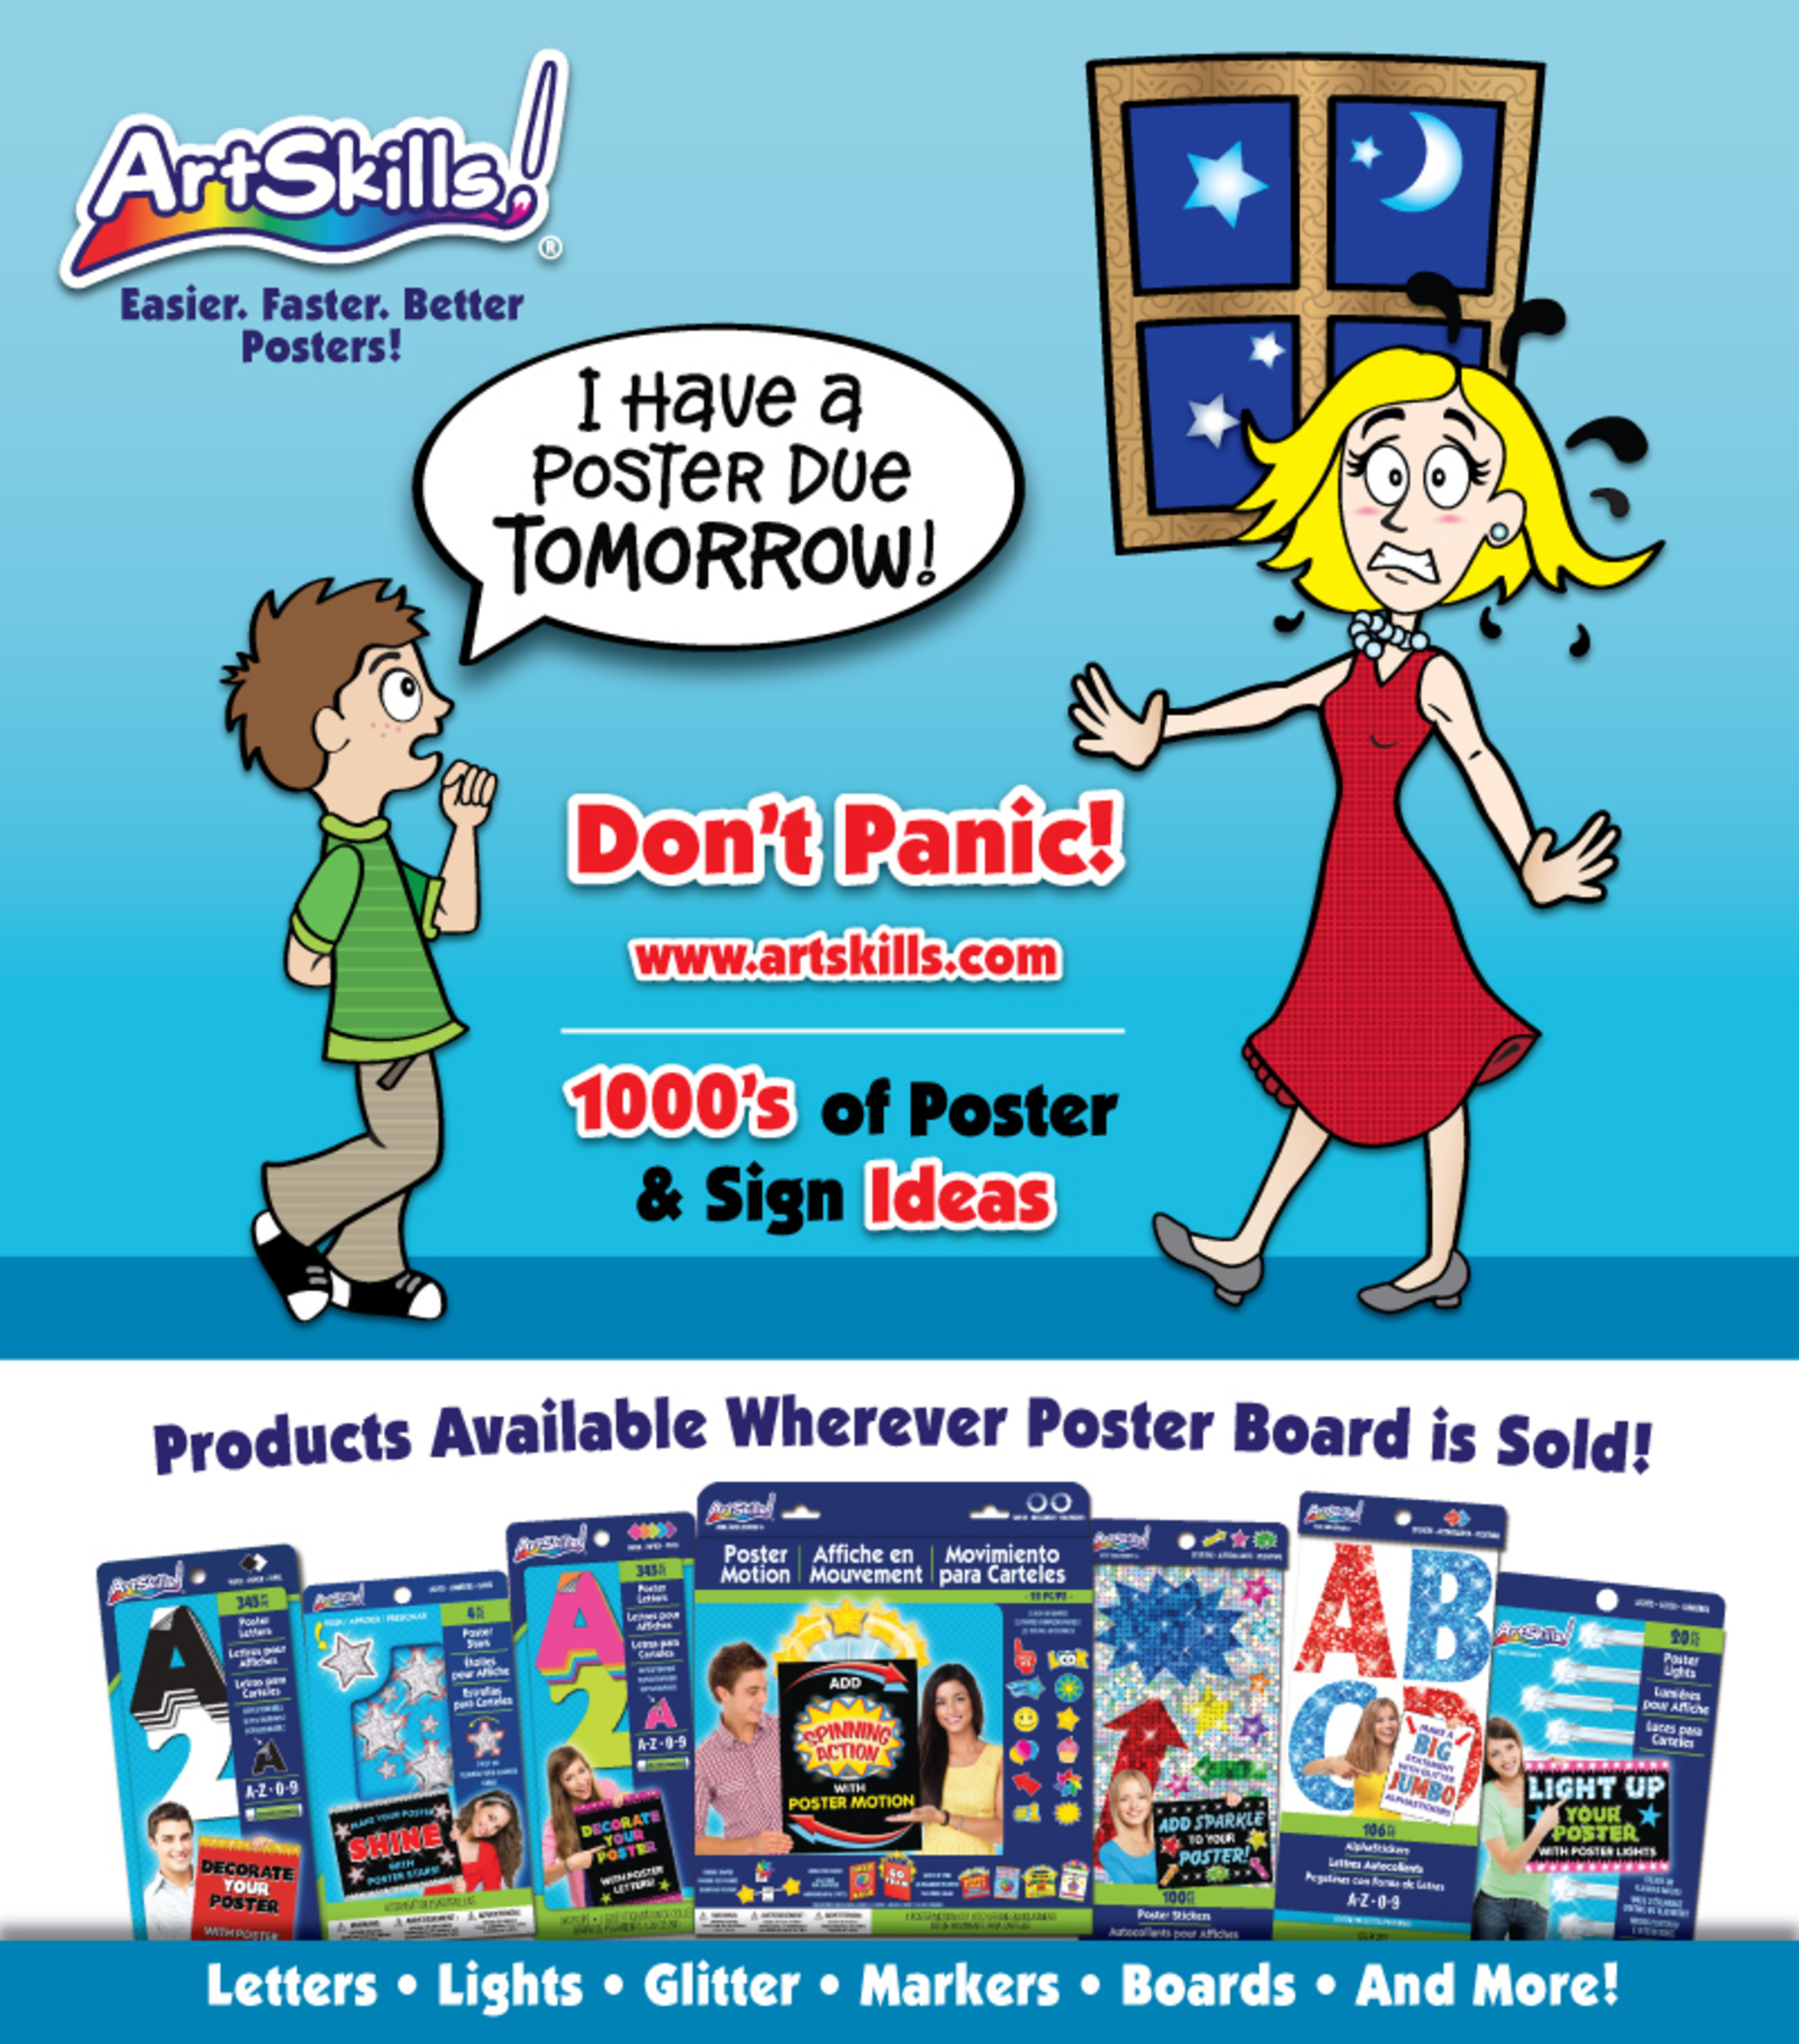 Make Easier, Faster, Better Posters with ArtSkills Poster Gallery at www.artskills.com (PRNewsFoto/ArtSkills)